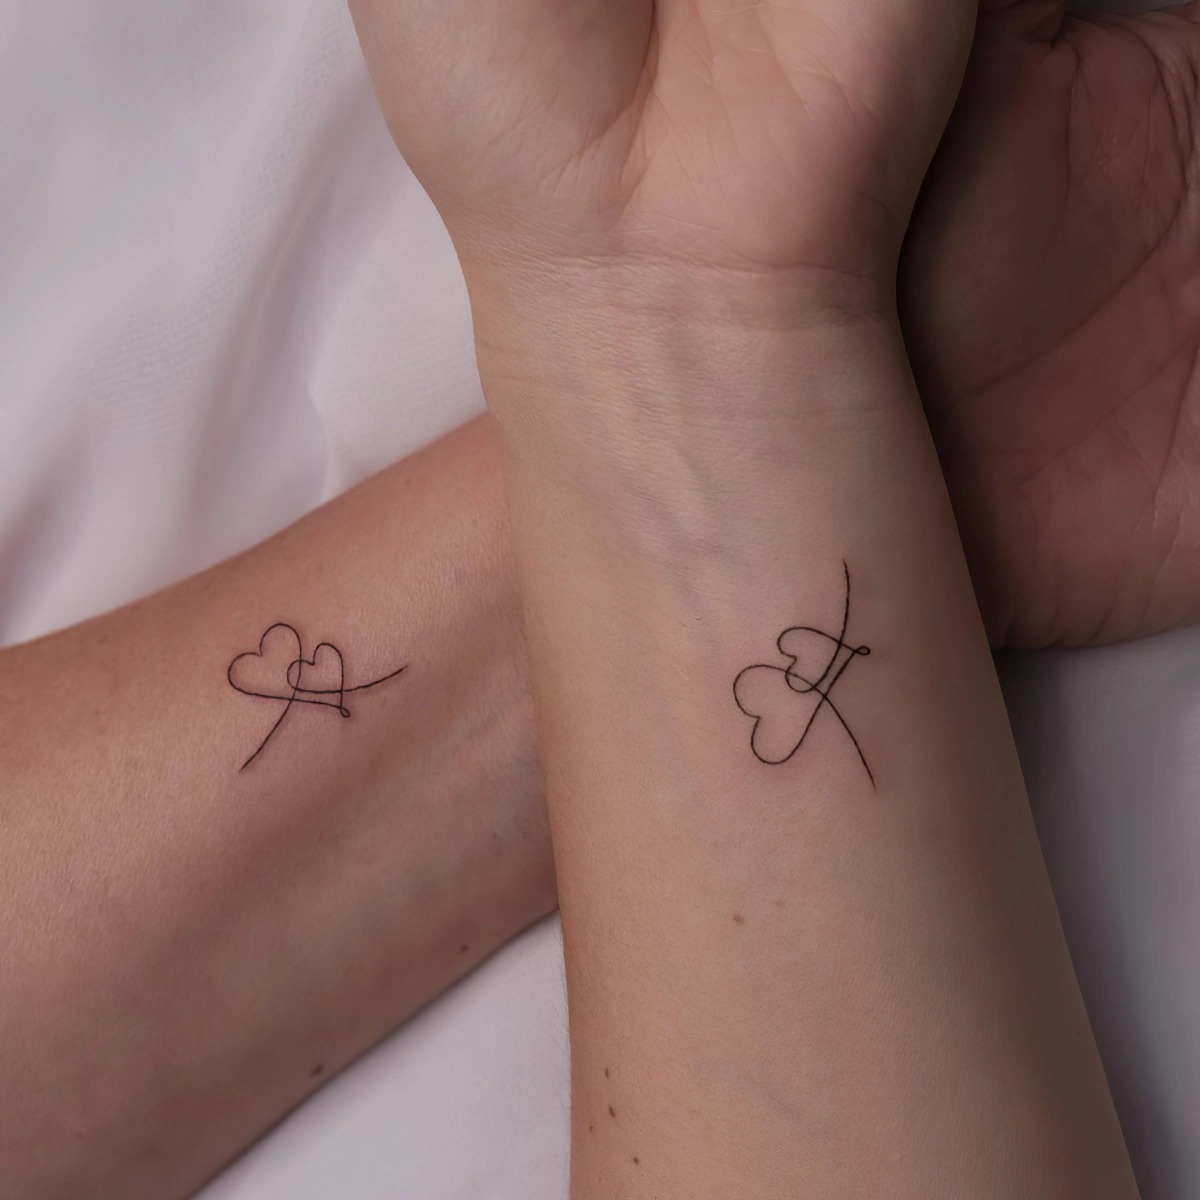 idee tatouage en couple petits coeurs discrets lignes minimaliste art corporel